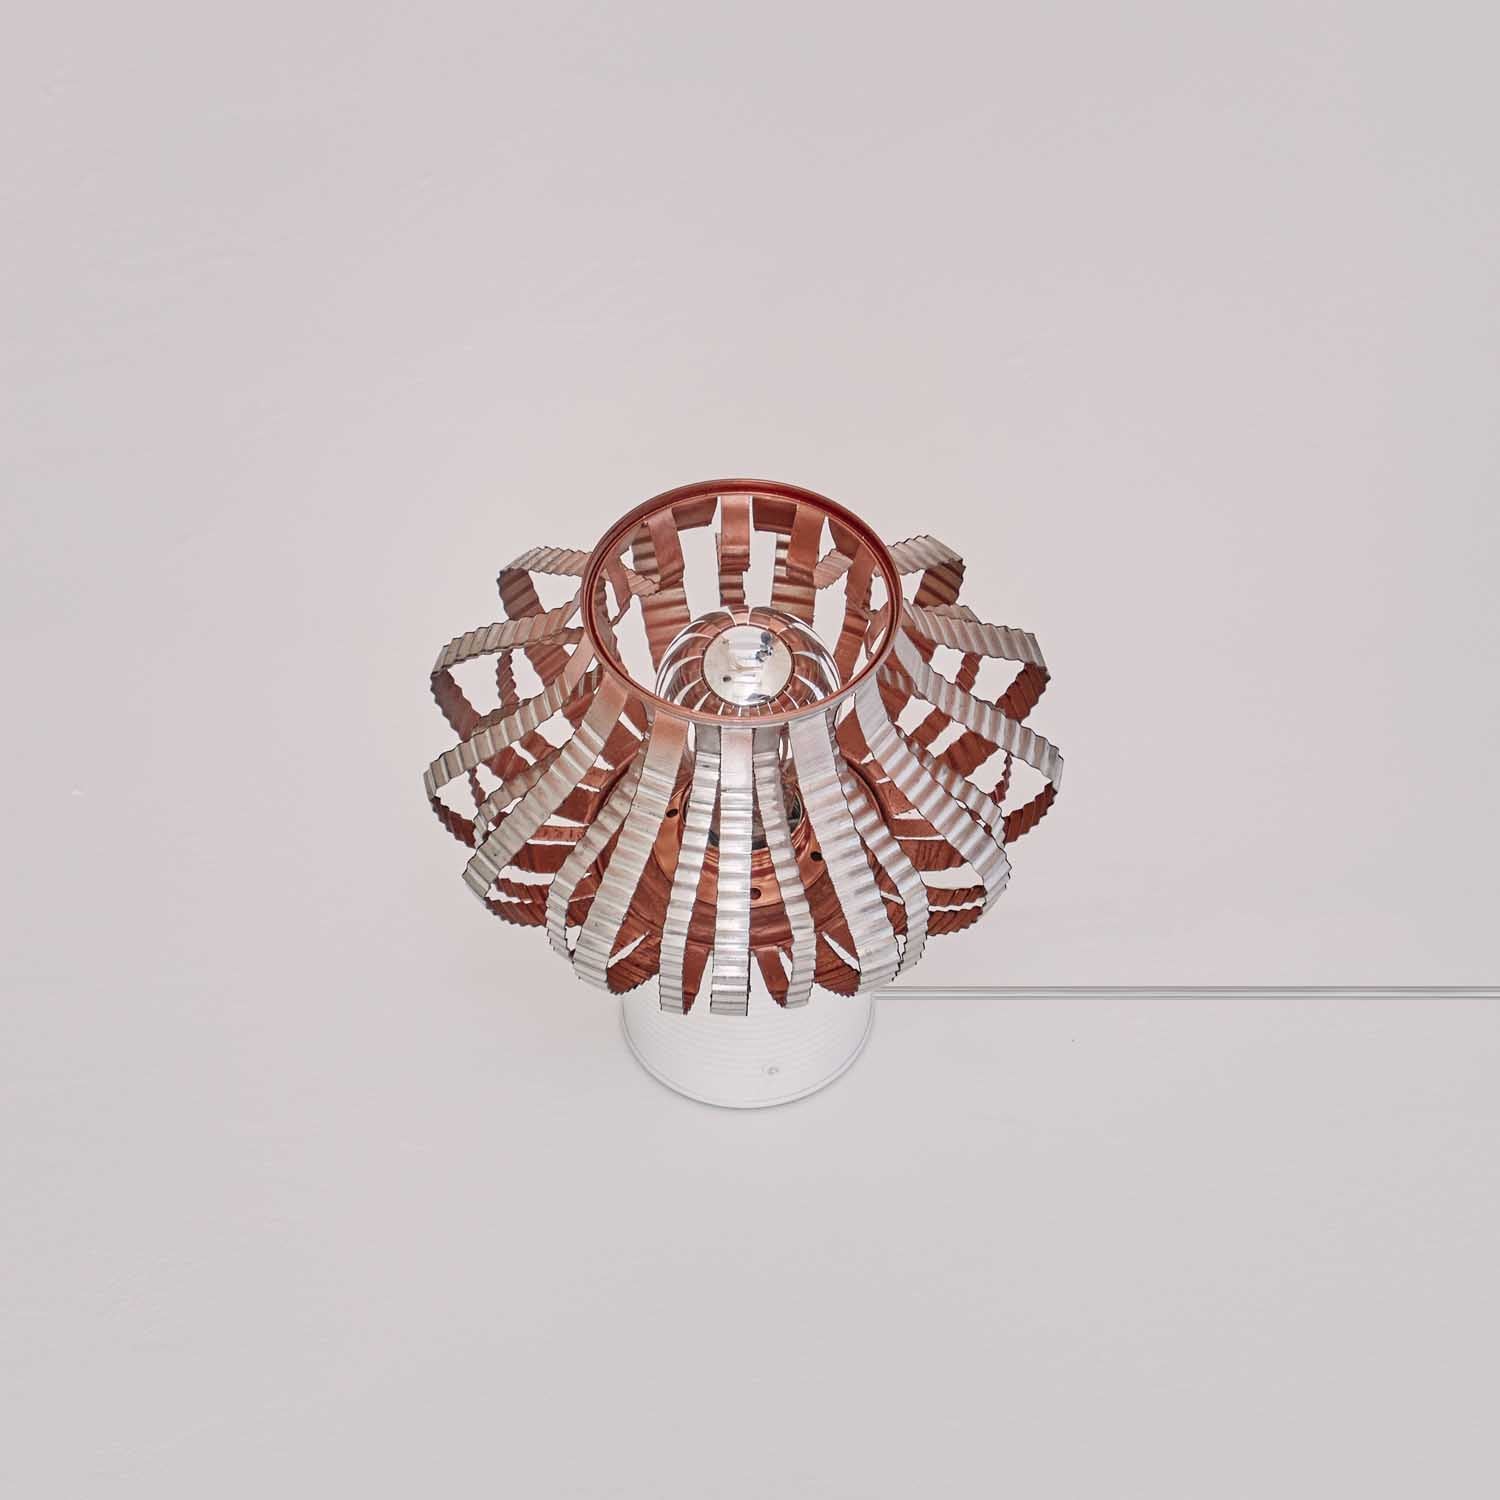 Artisanal Craftsmanship: Tiny Table Lamp